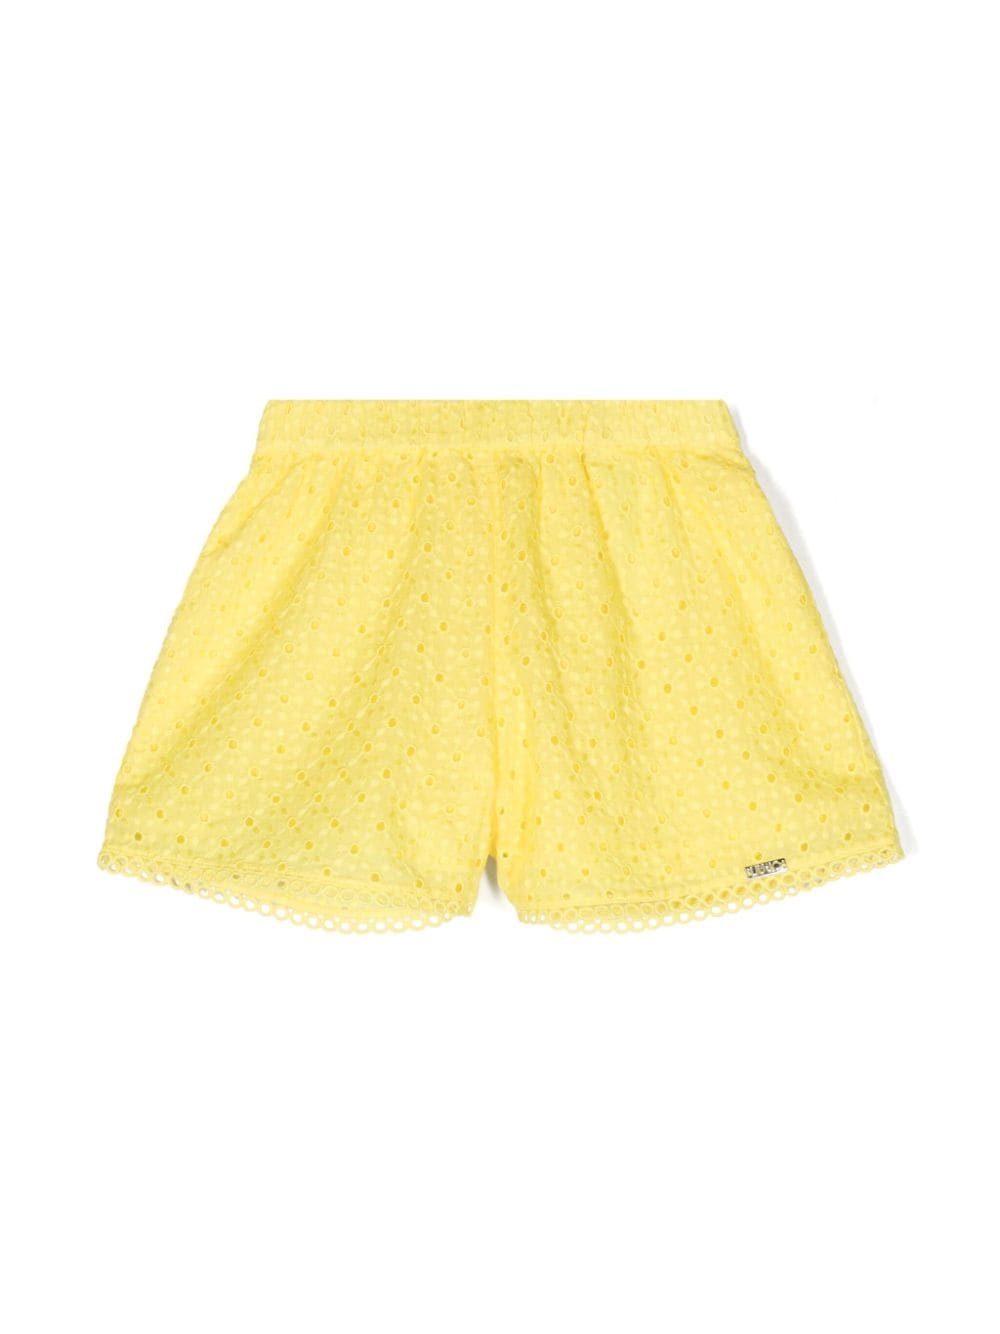 Yellow Bermuda shorts for girls